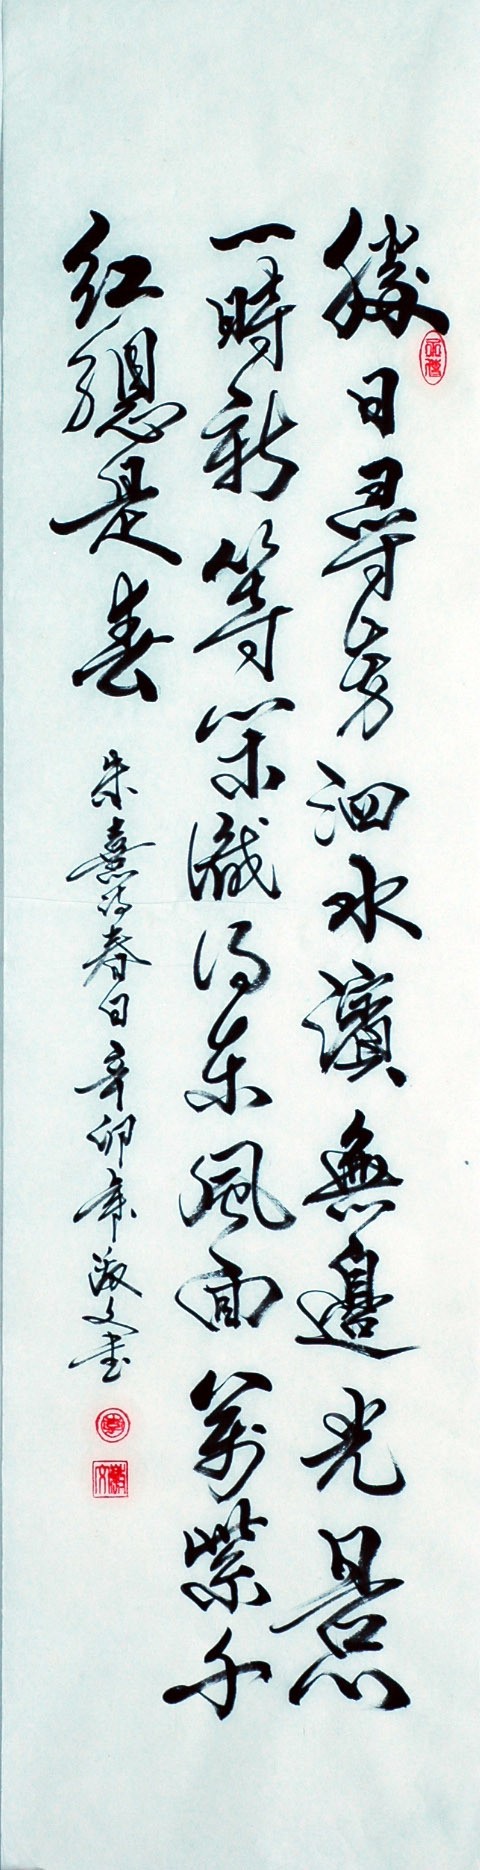 Chinese Cursive Scripts Painting - CNAG007203